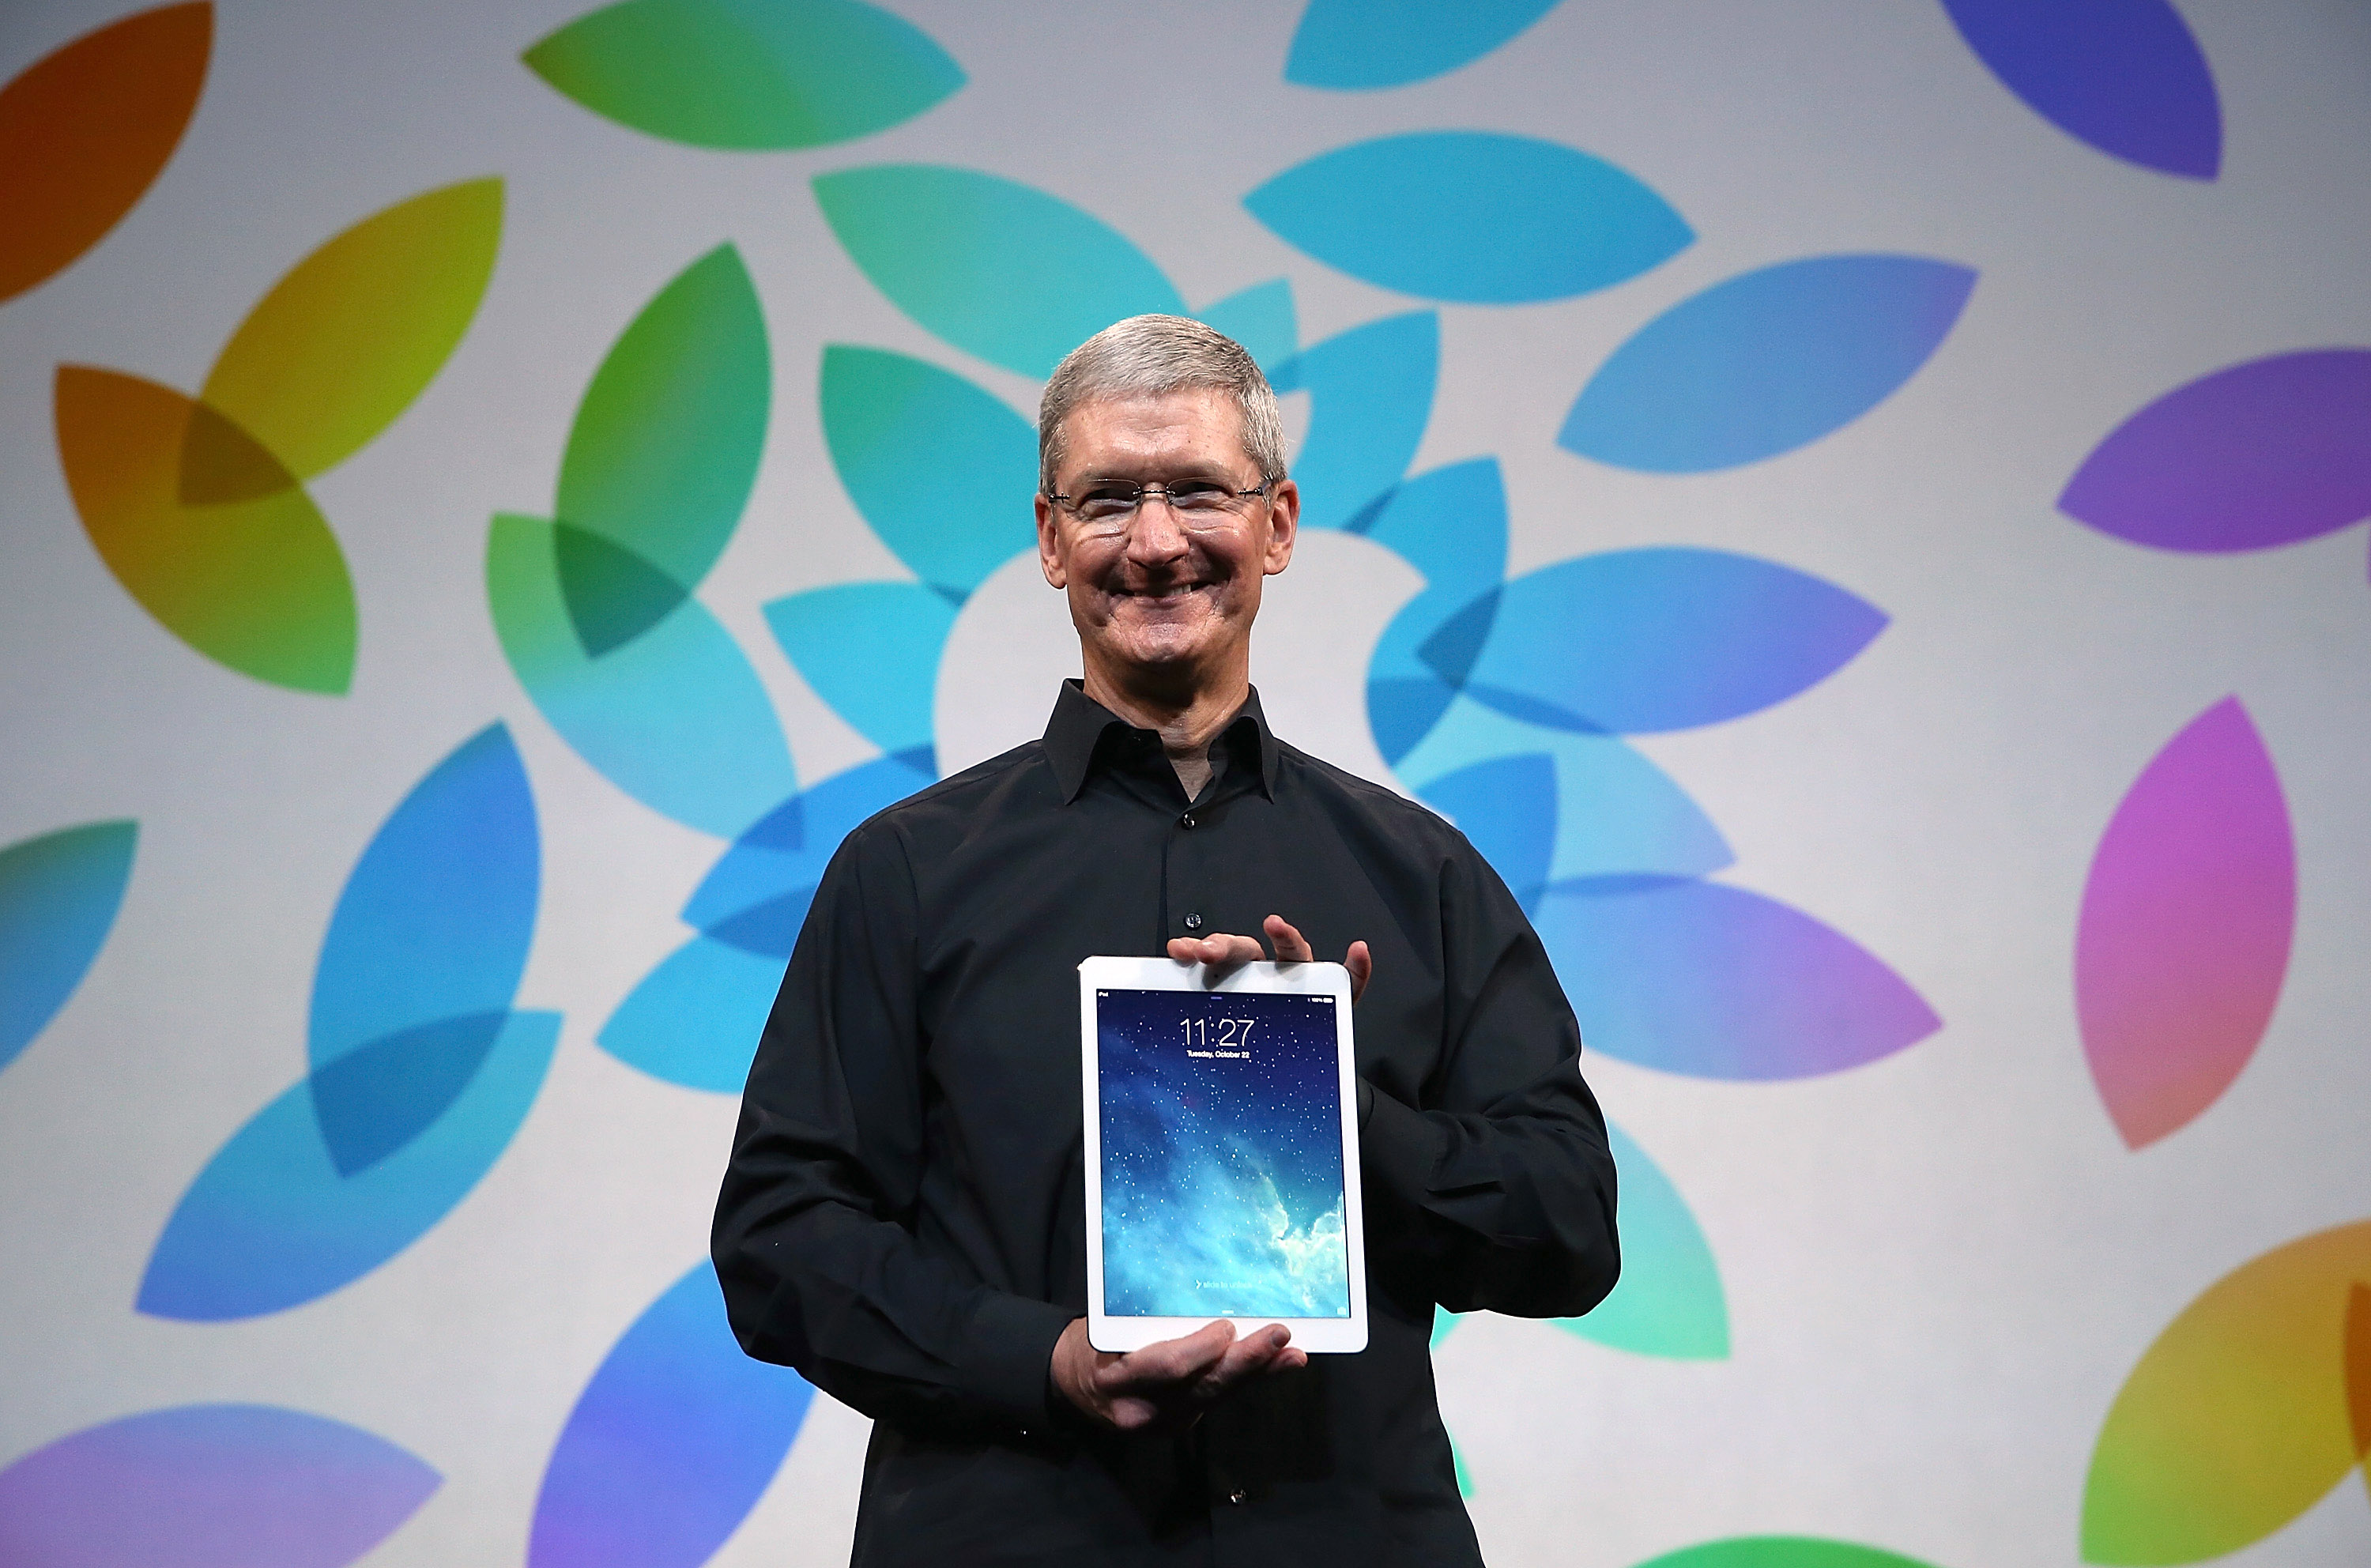 iPad Air 2, iPad 3 Mini, iPad Pro 12.9 Release: Apple enthüllt neue iPads Mitte Oktober